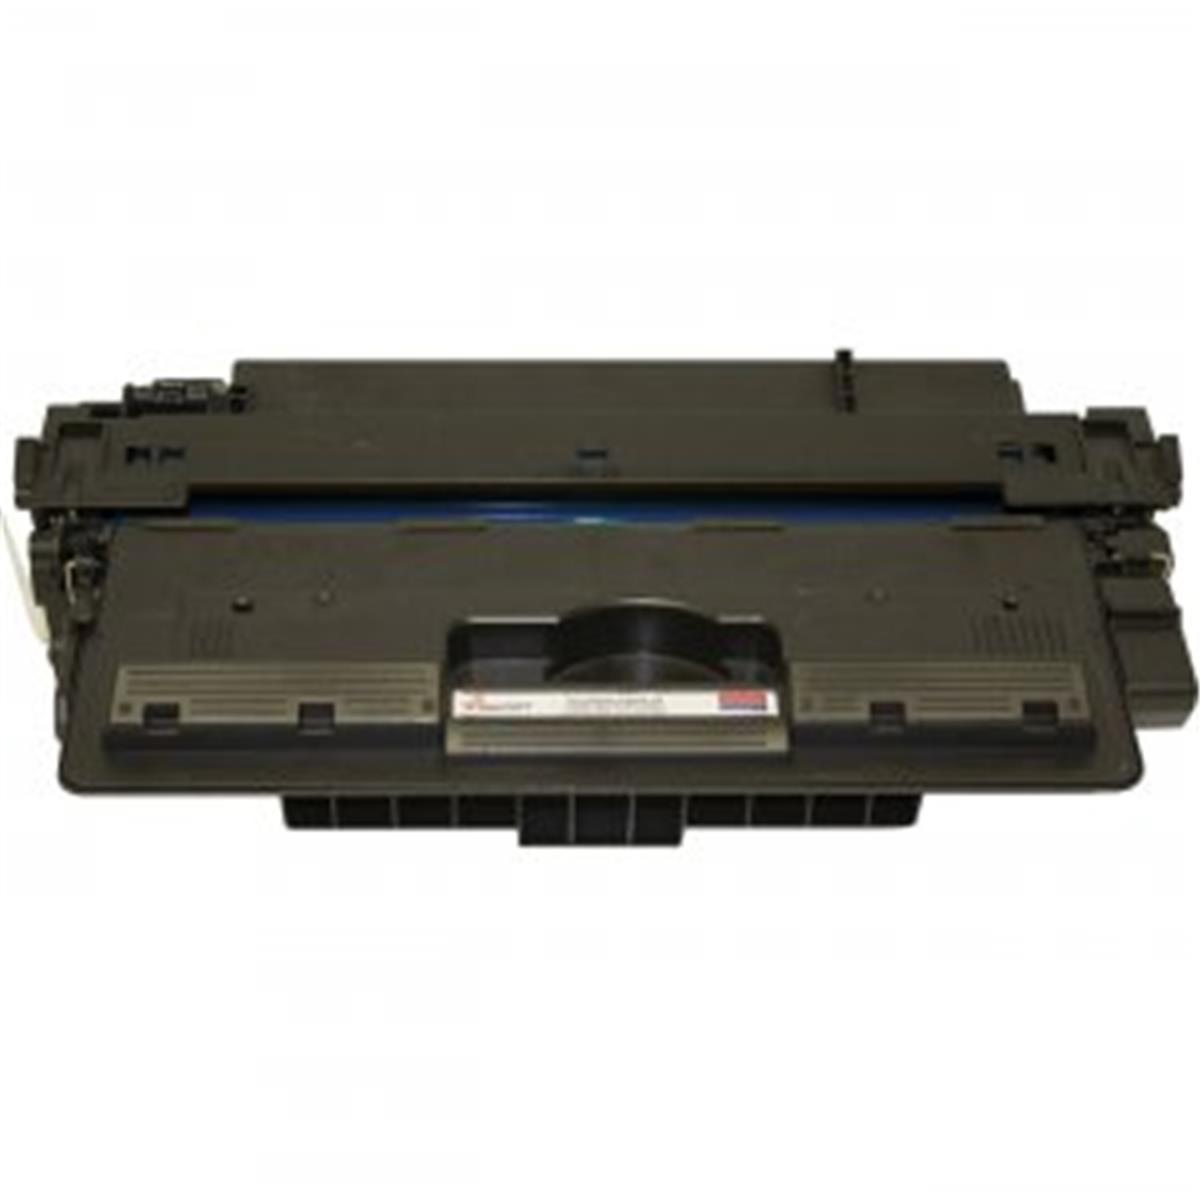 Picture of Abilityone AB16703515 Alternative 26A Standard Black Toner Cartridge for HP LaserJet Pro M402N